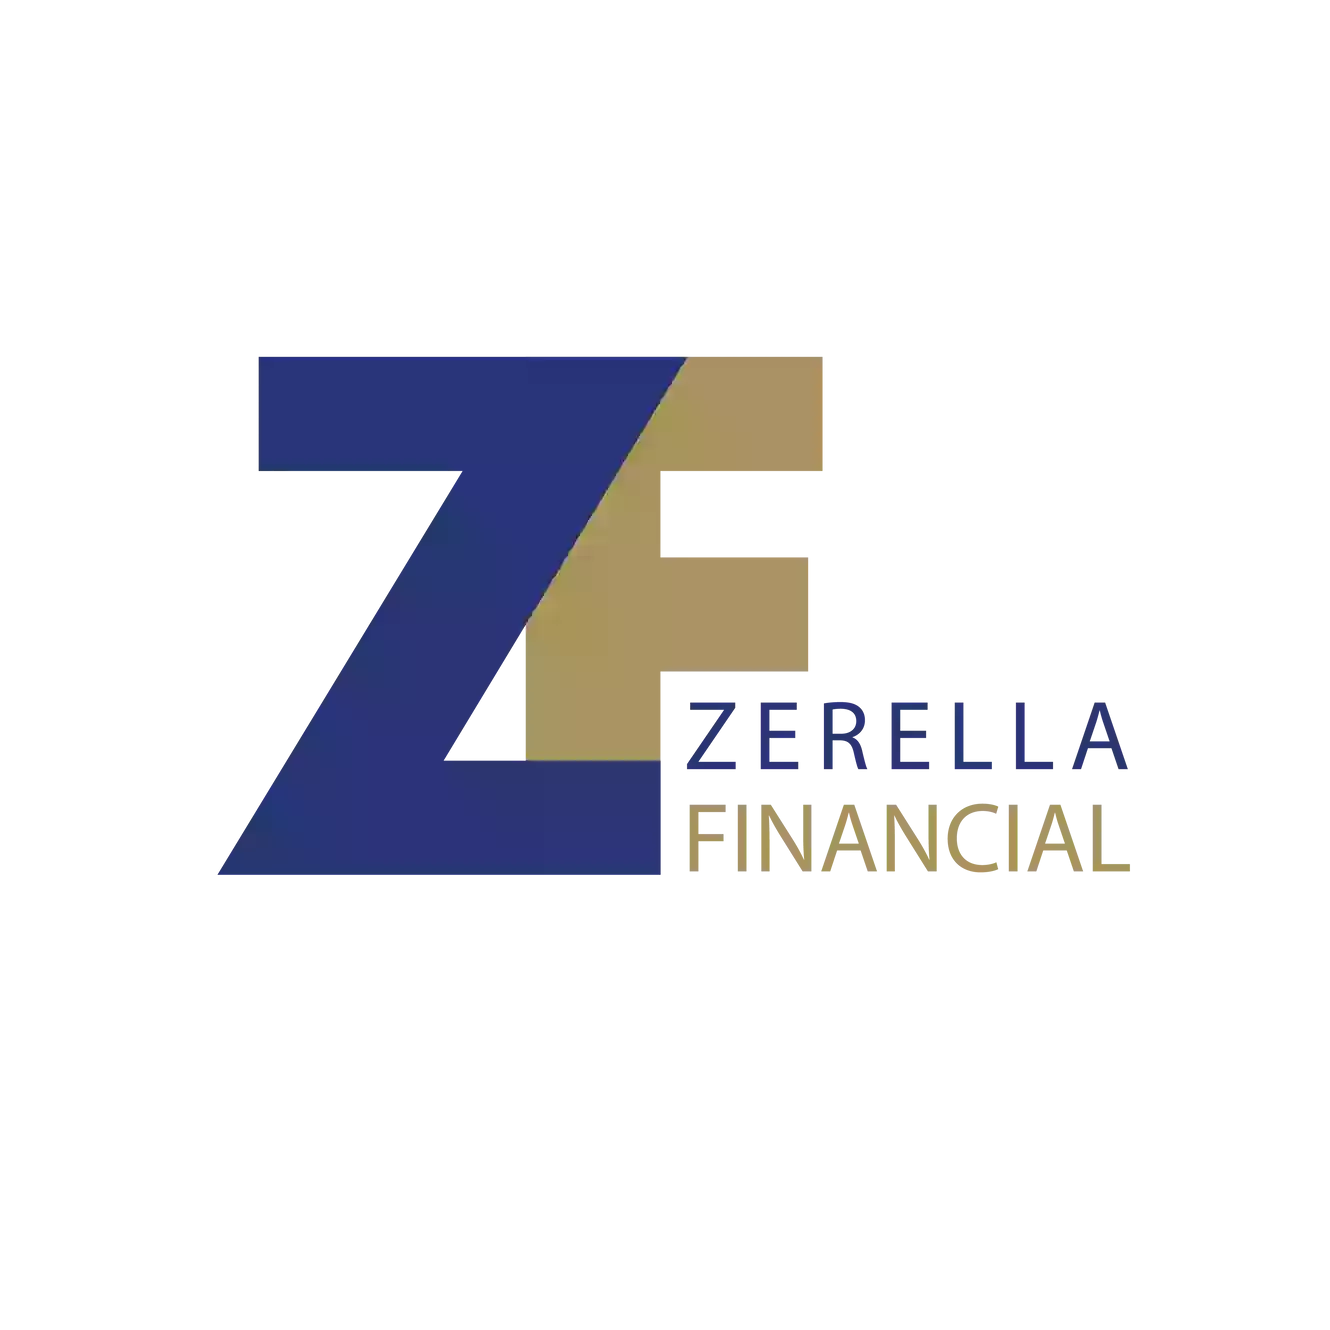 Zerella Financial